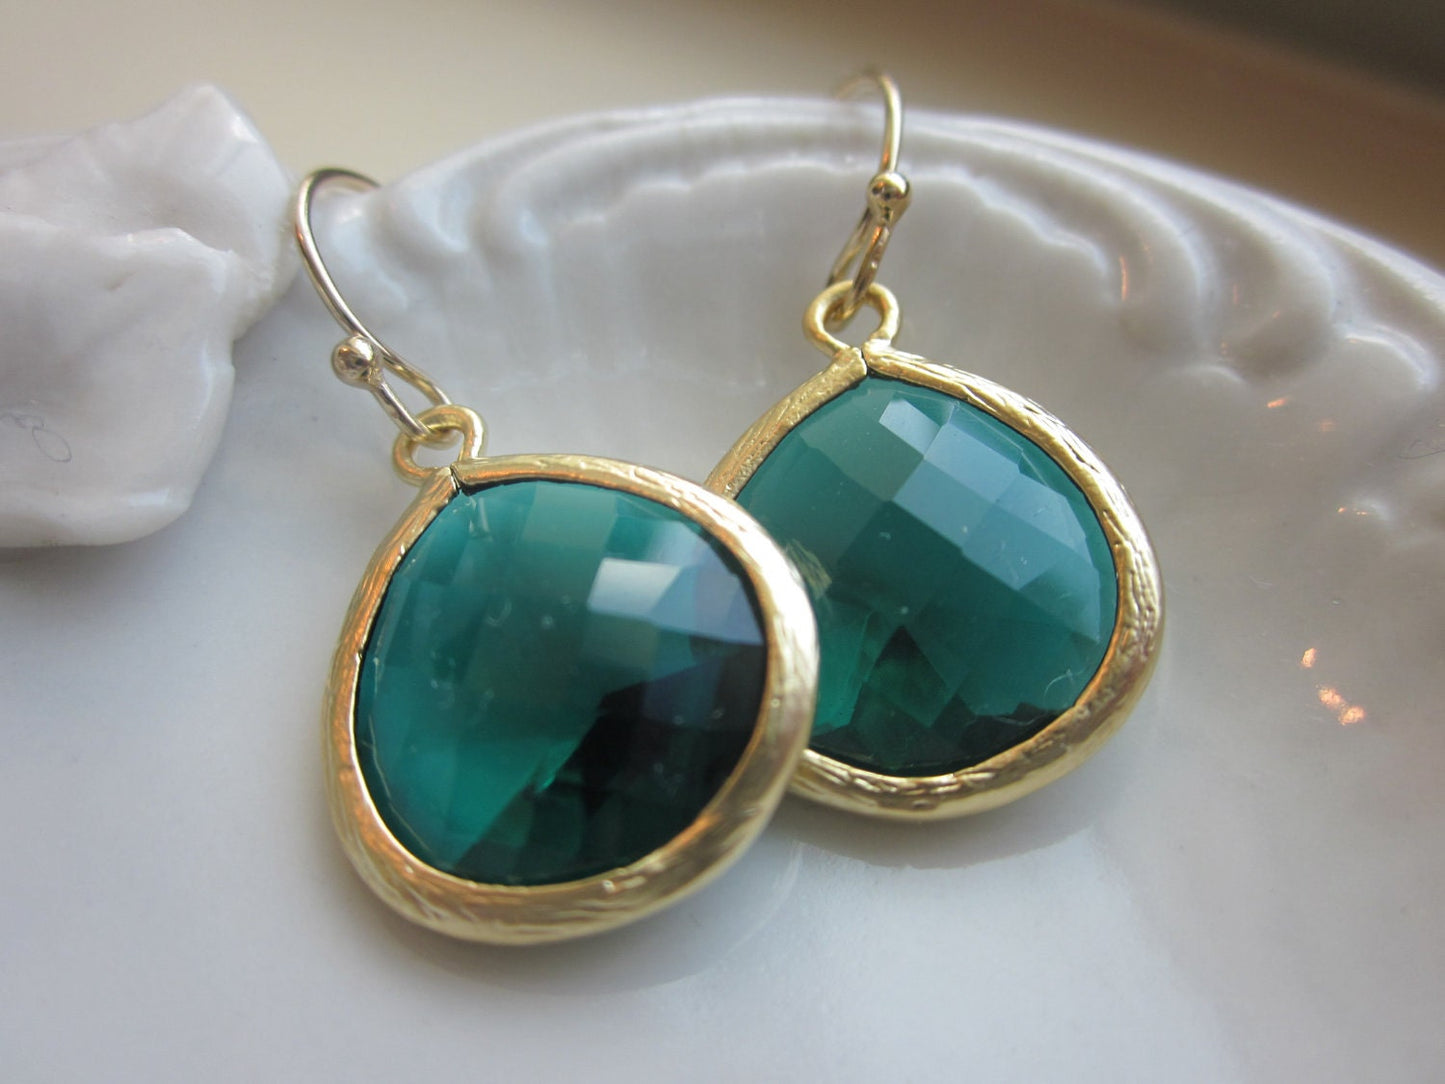 Emerald Green Earrings Gold Plated Large Pendant - Wedding Earrings - Bridal Earrings - Bridesmaid Earrings